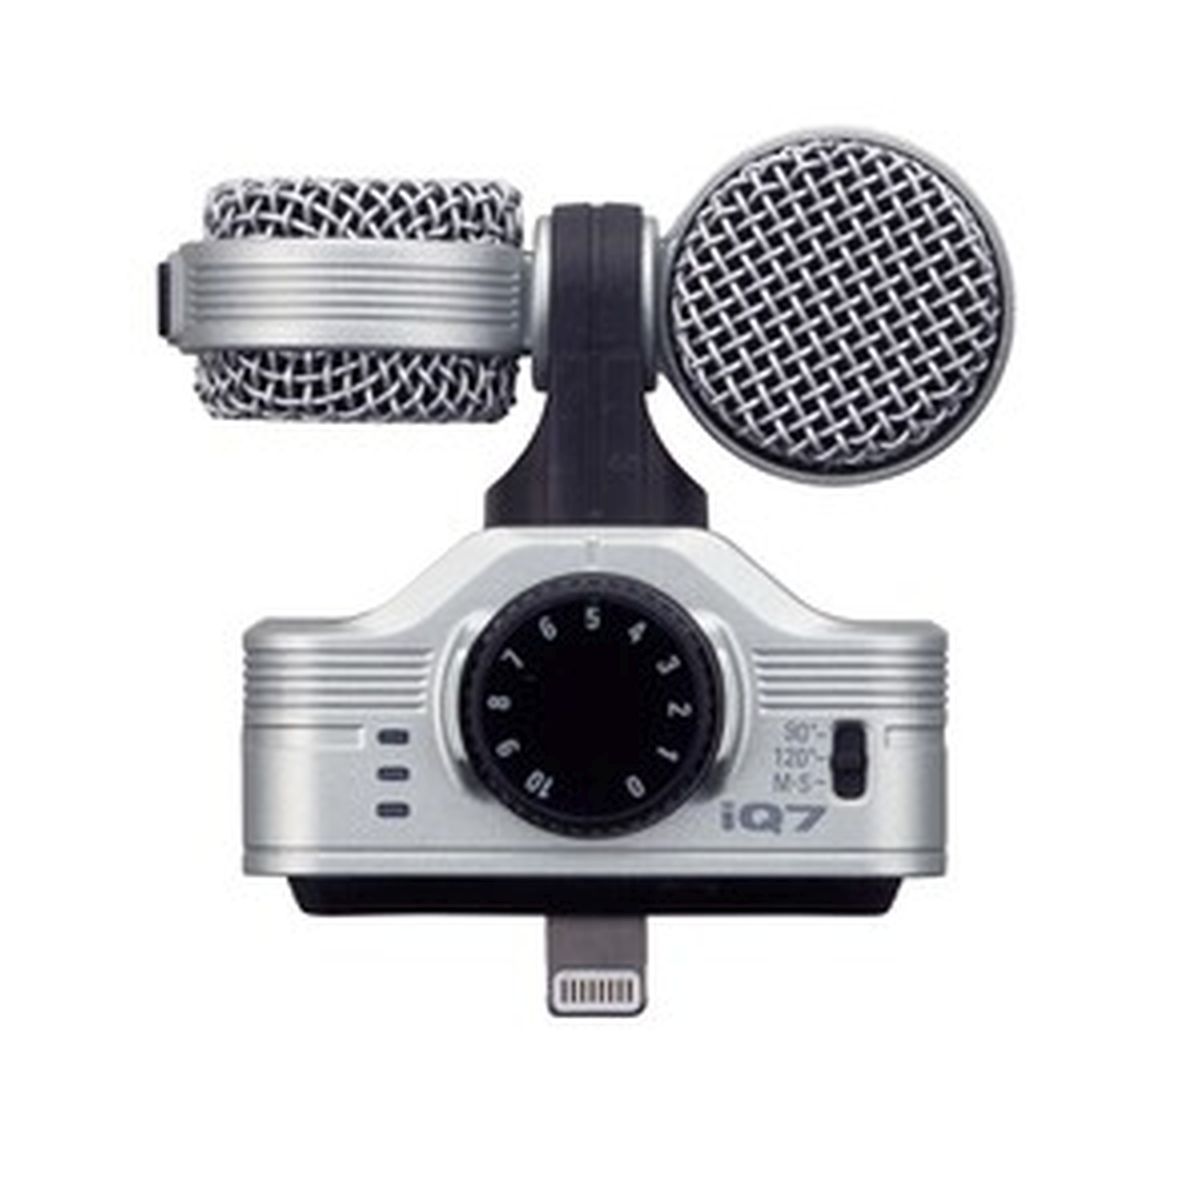 Zoom iQ7 MS Stereo Mikrofon für iPhone, iPad und iPod Touch